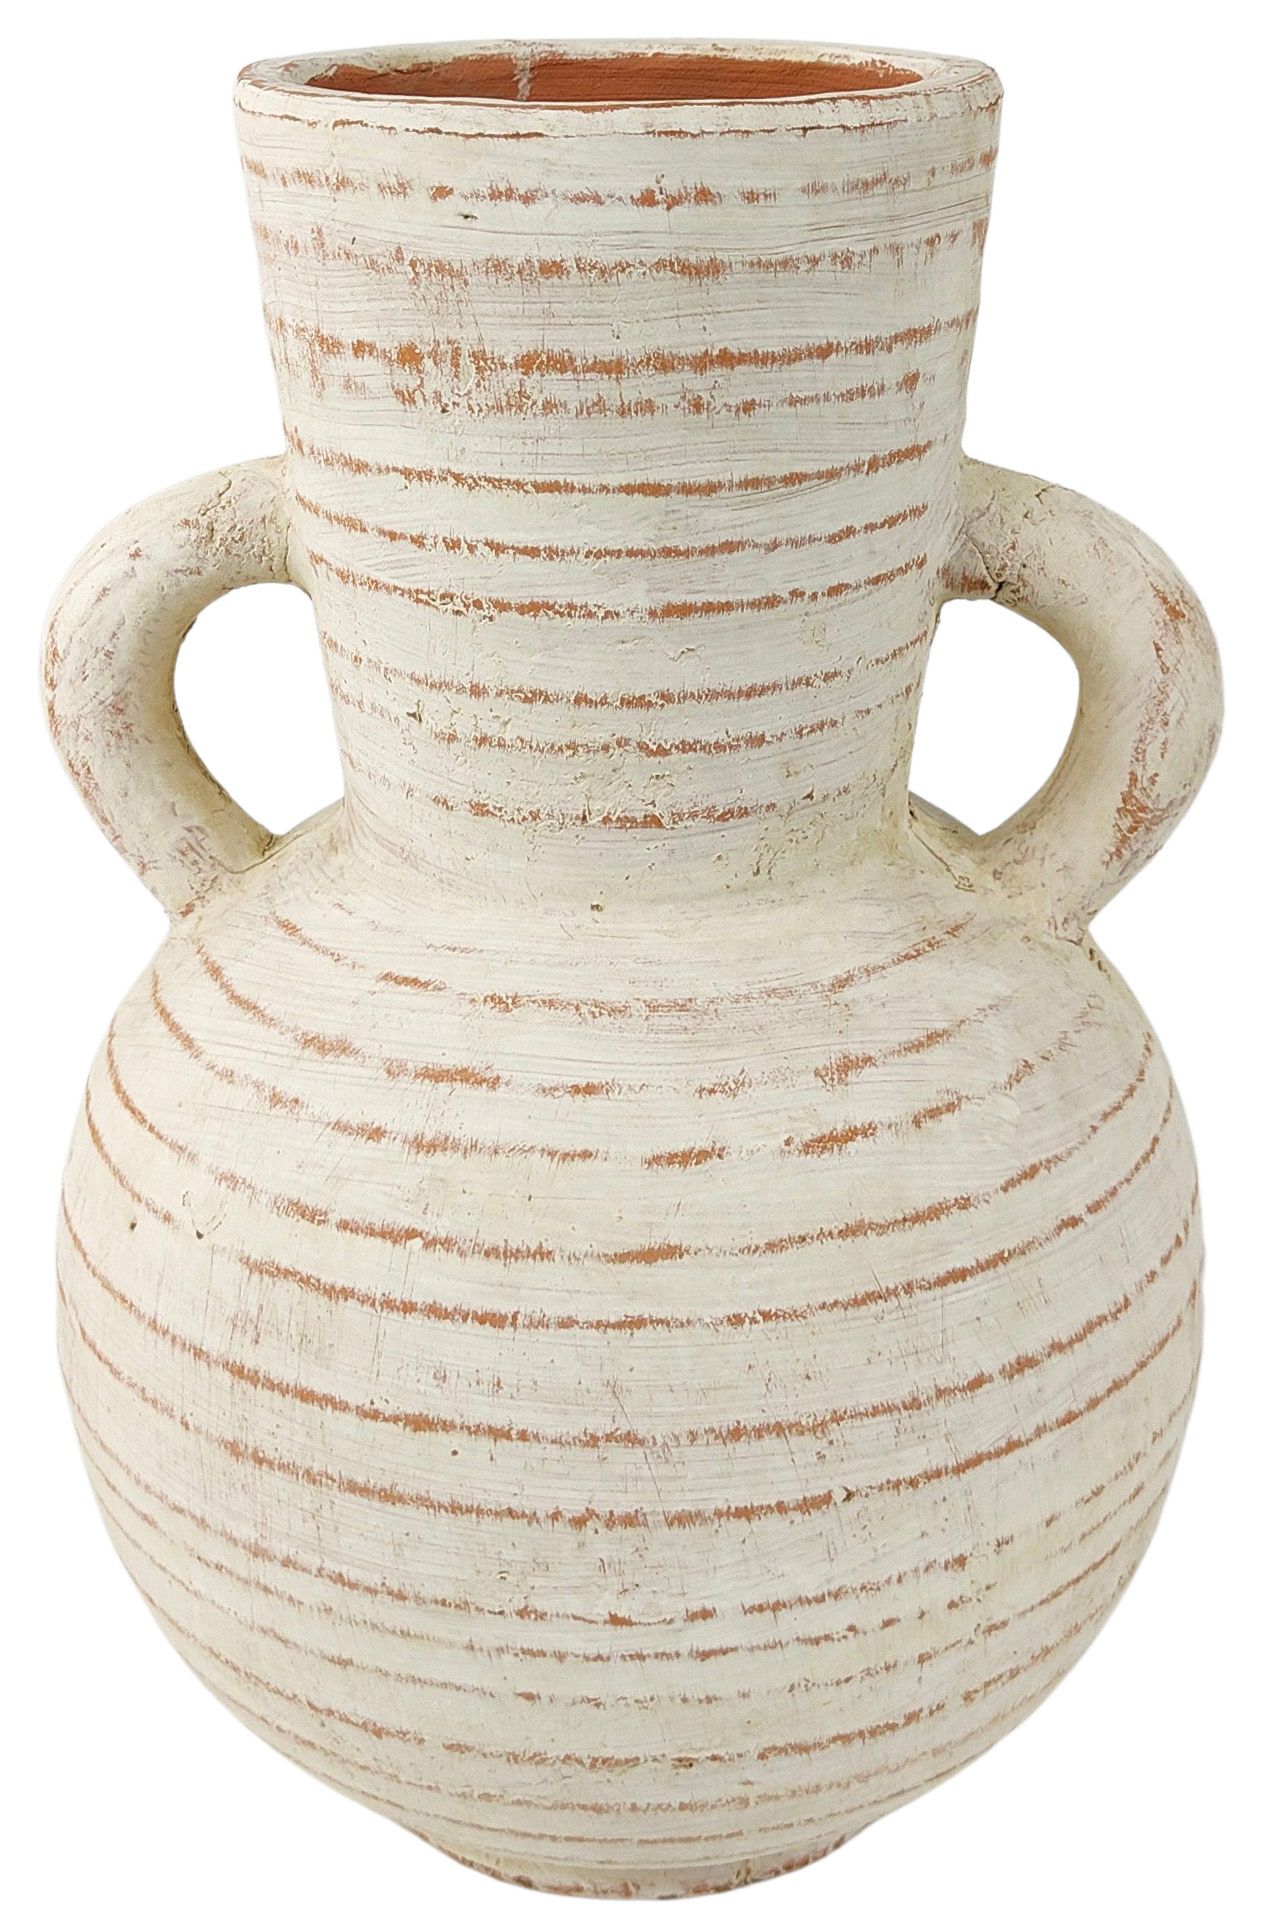 Sloane Vase